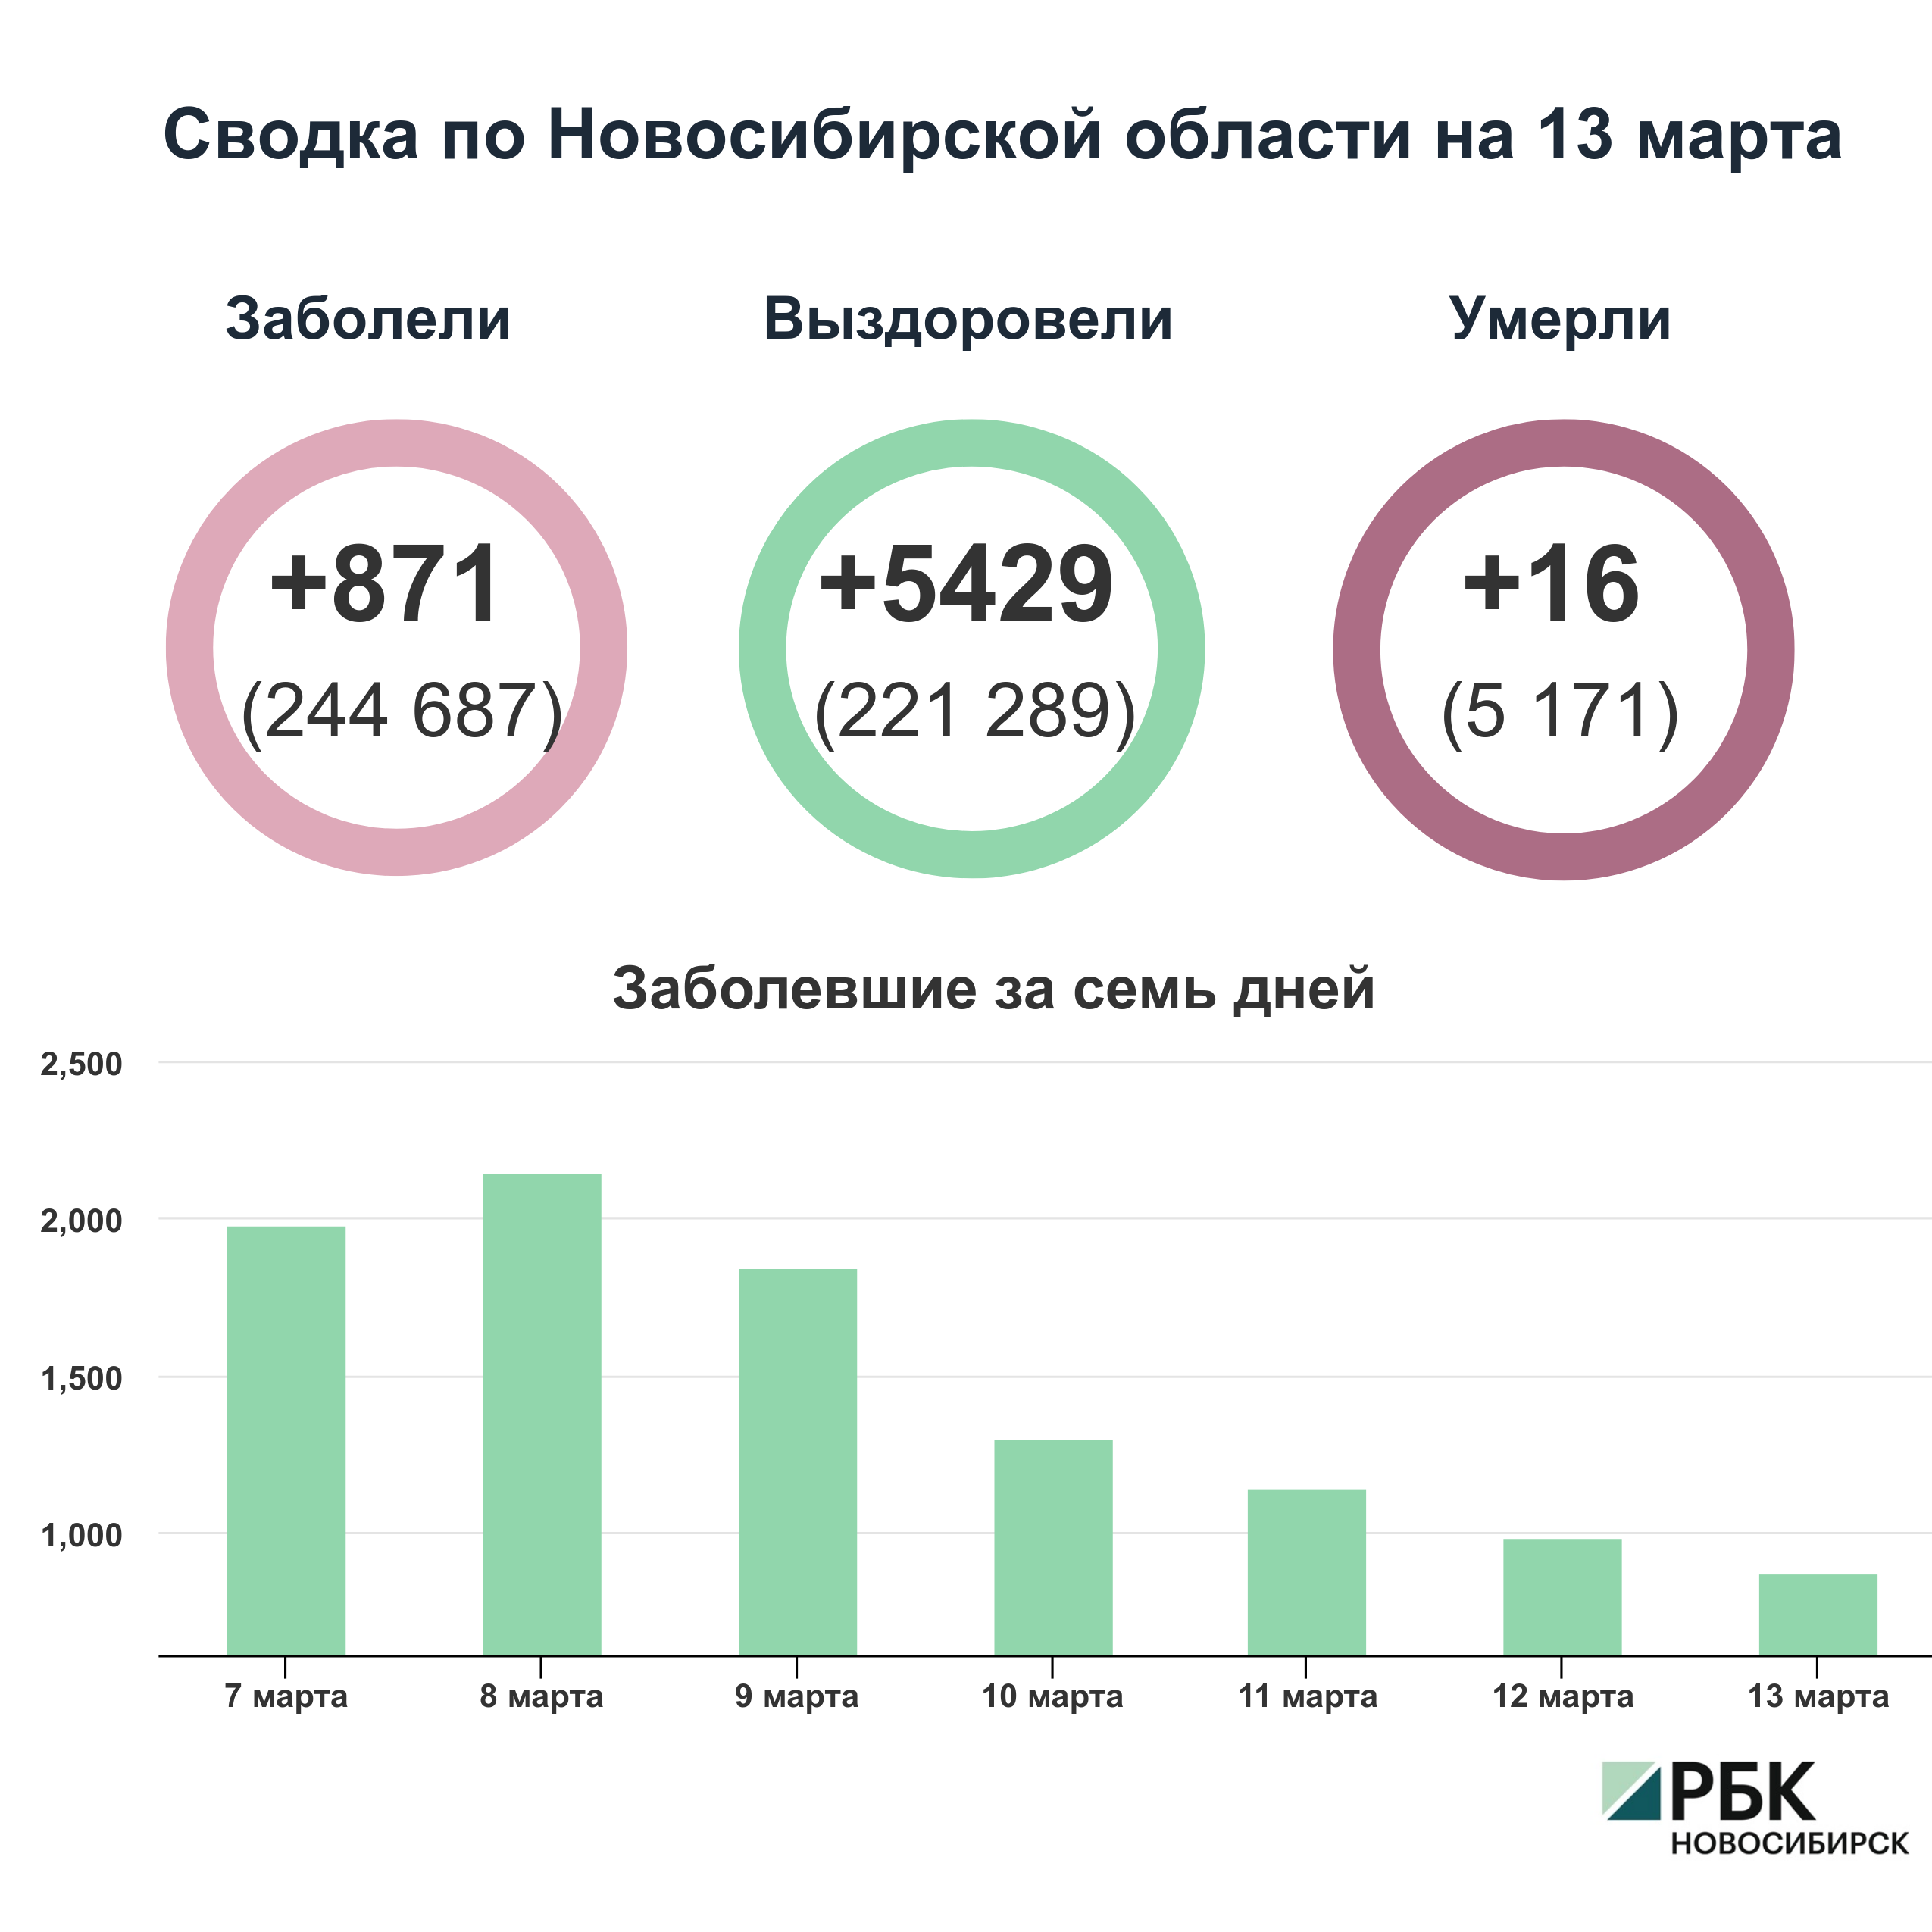 Коронавирус в Новосибирске: сводка на 13 марта